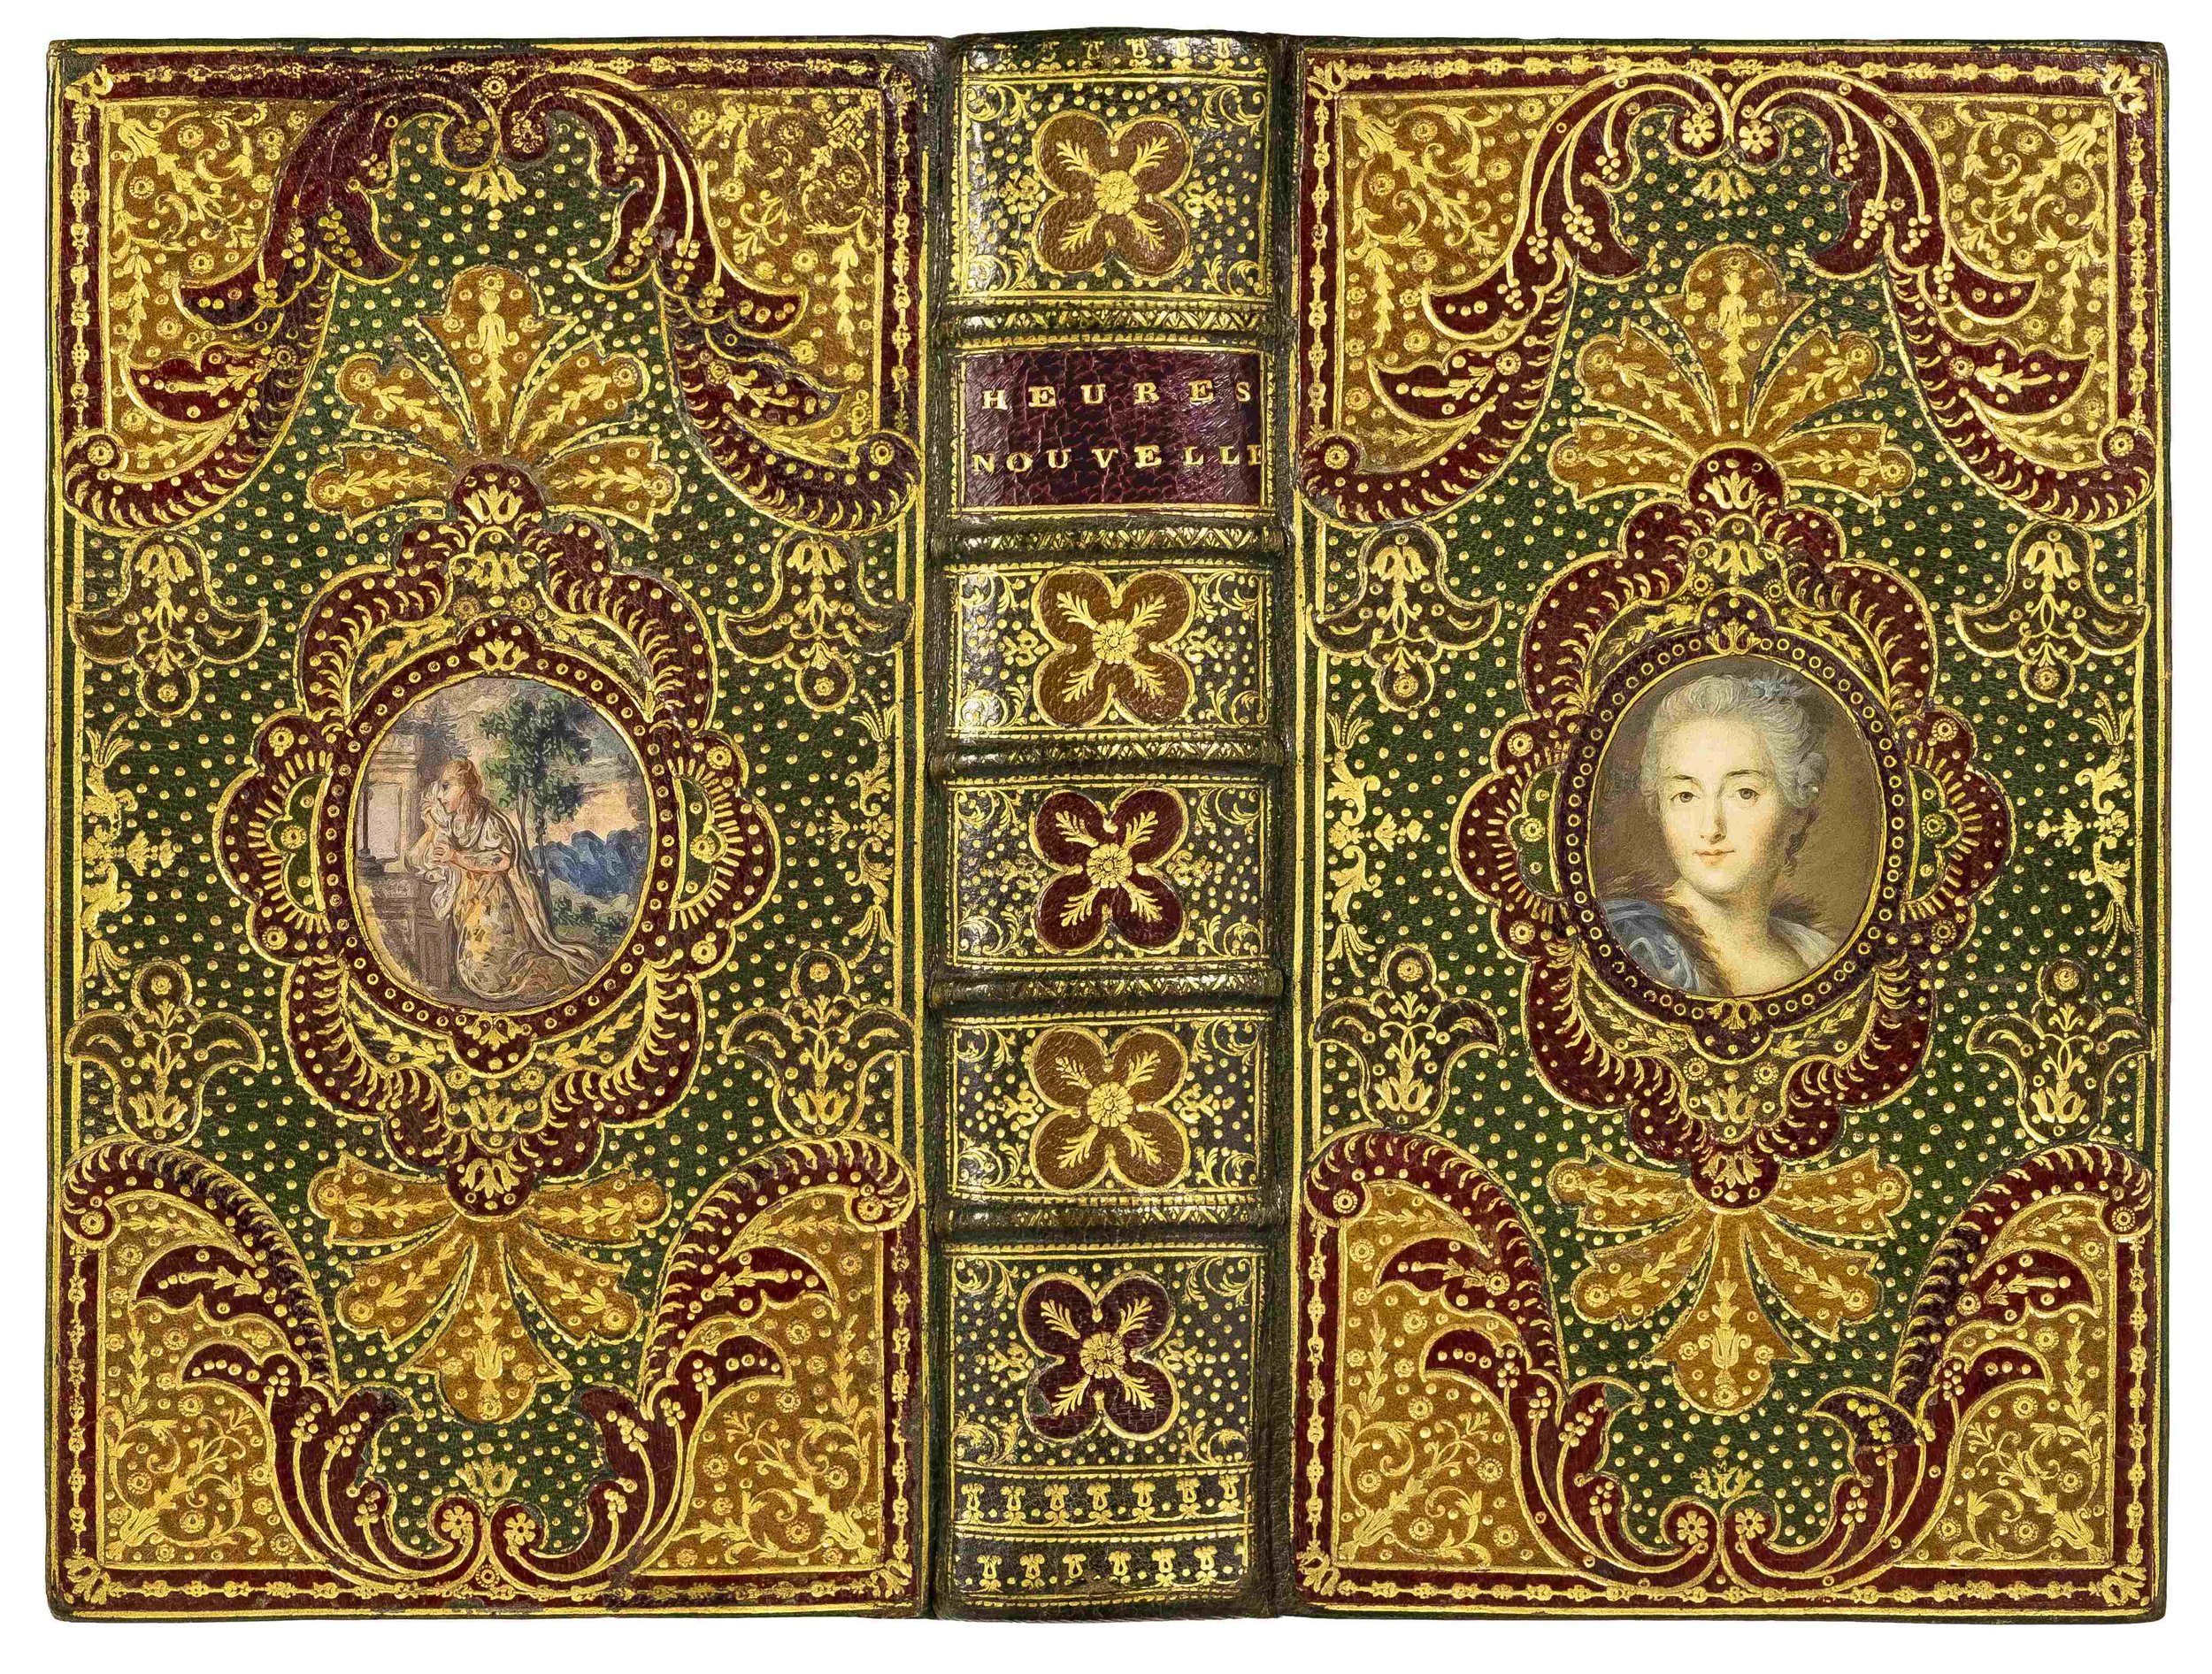 093-inlaid-bing-madame-de-pompadour-portrait-mosaic-morocco-reliure-maroquin-18th-century.jpg